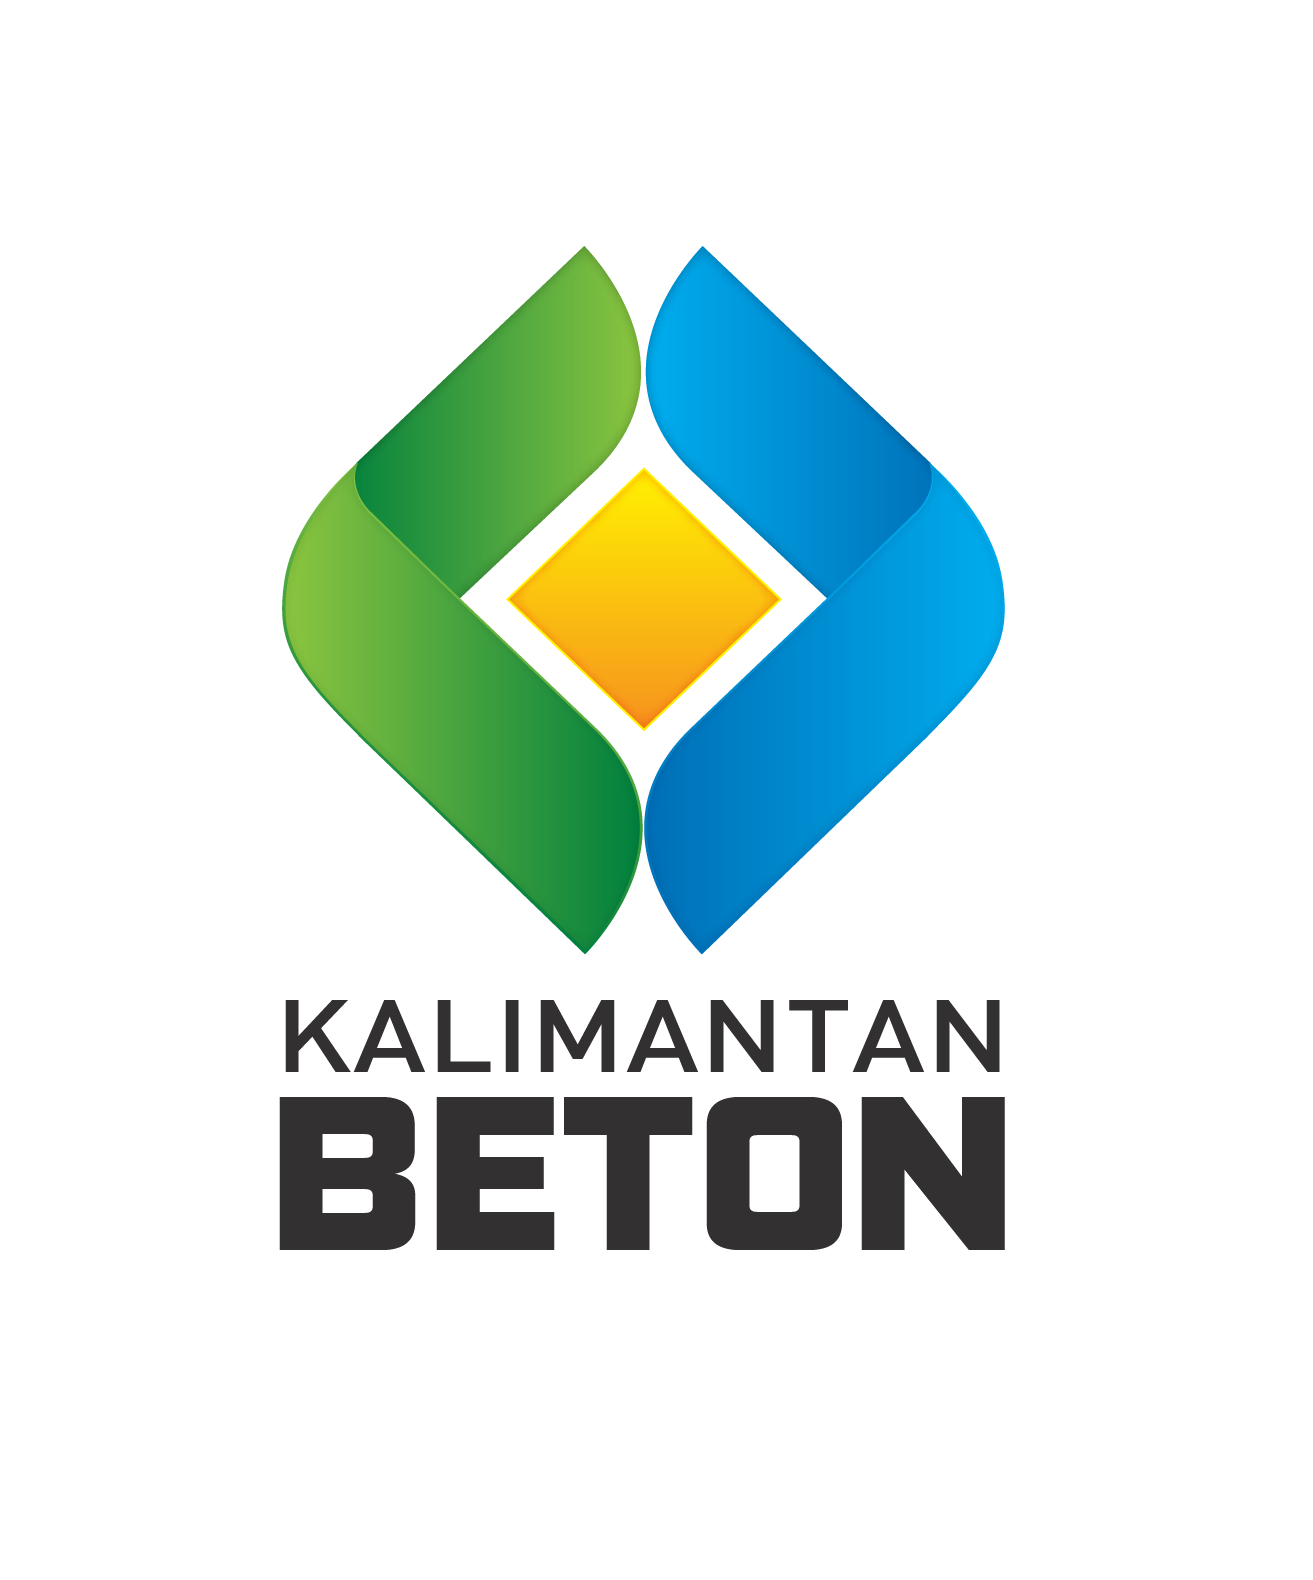 Kalimantan Beton